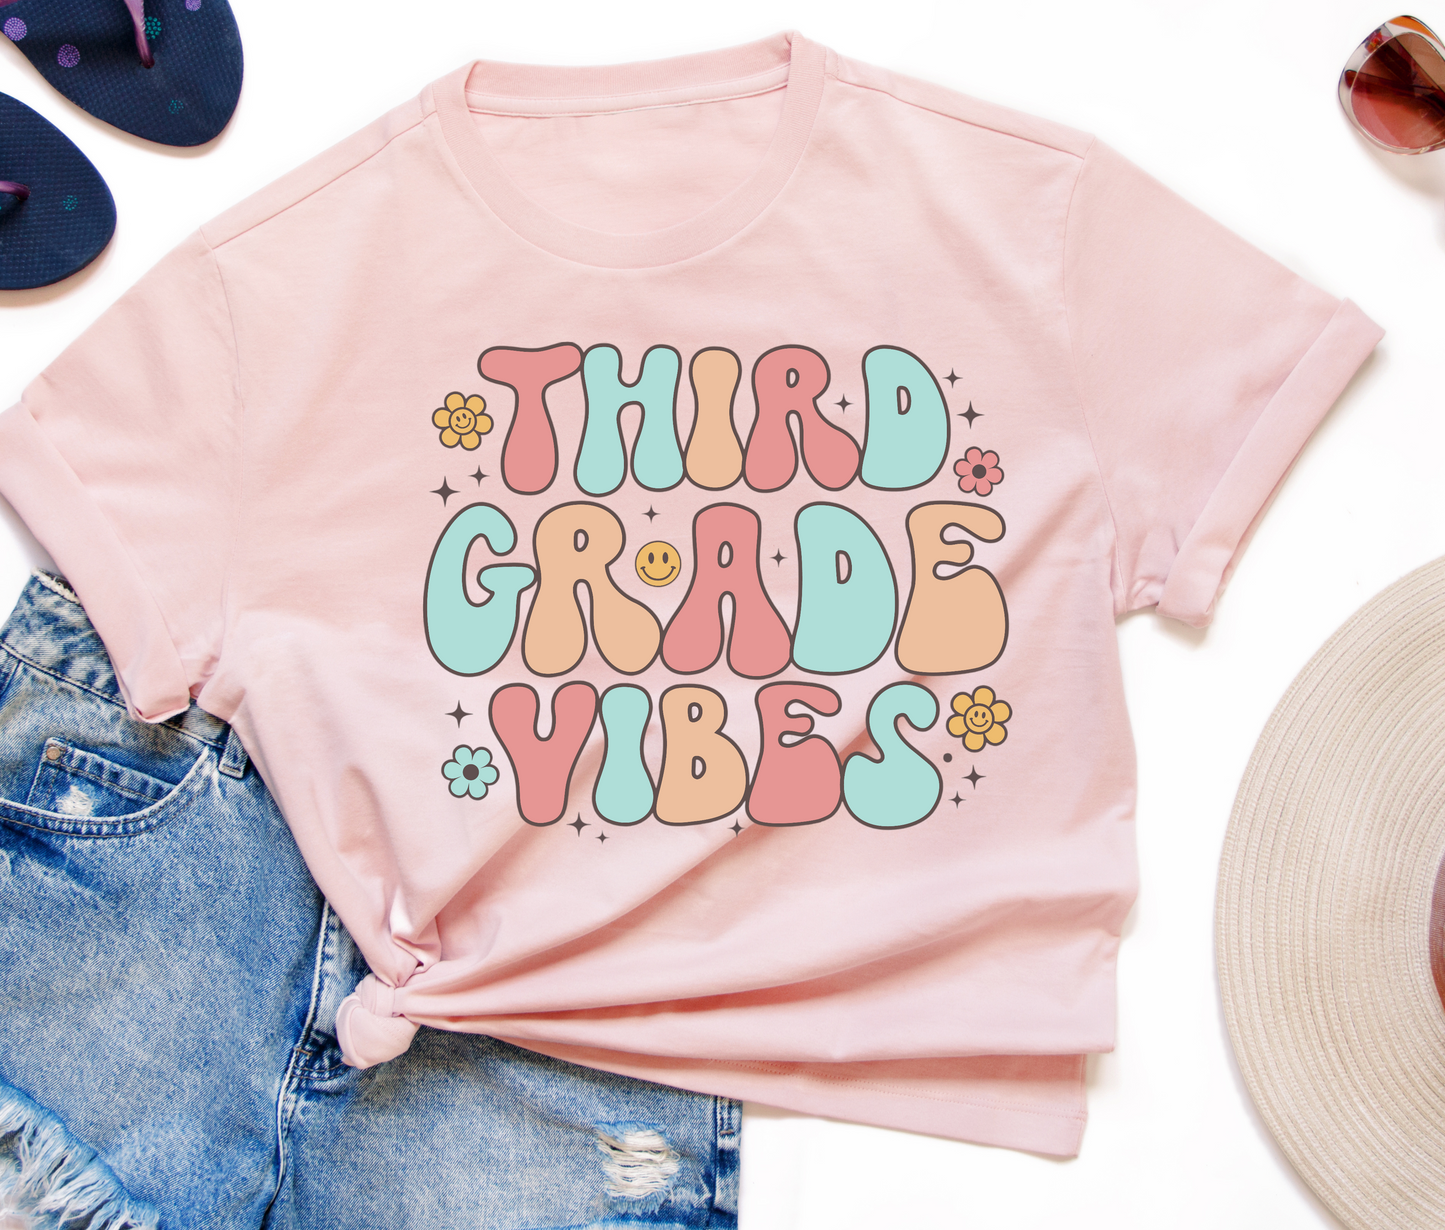 Groovy Third Grade Adult Cotton T-shirt